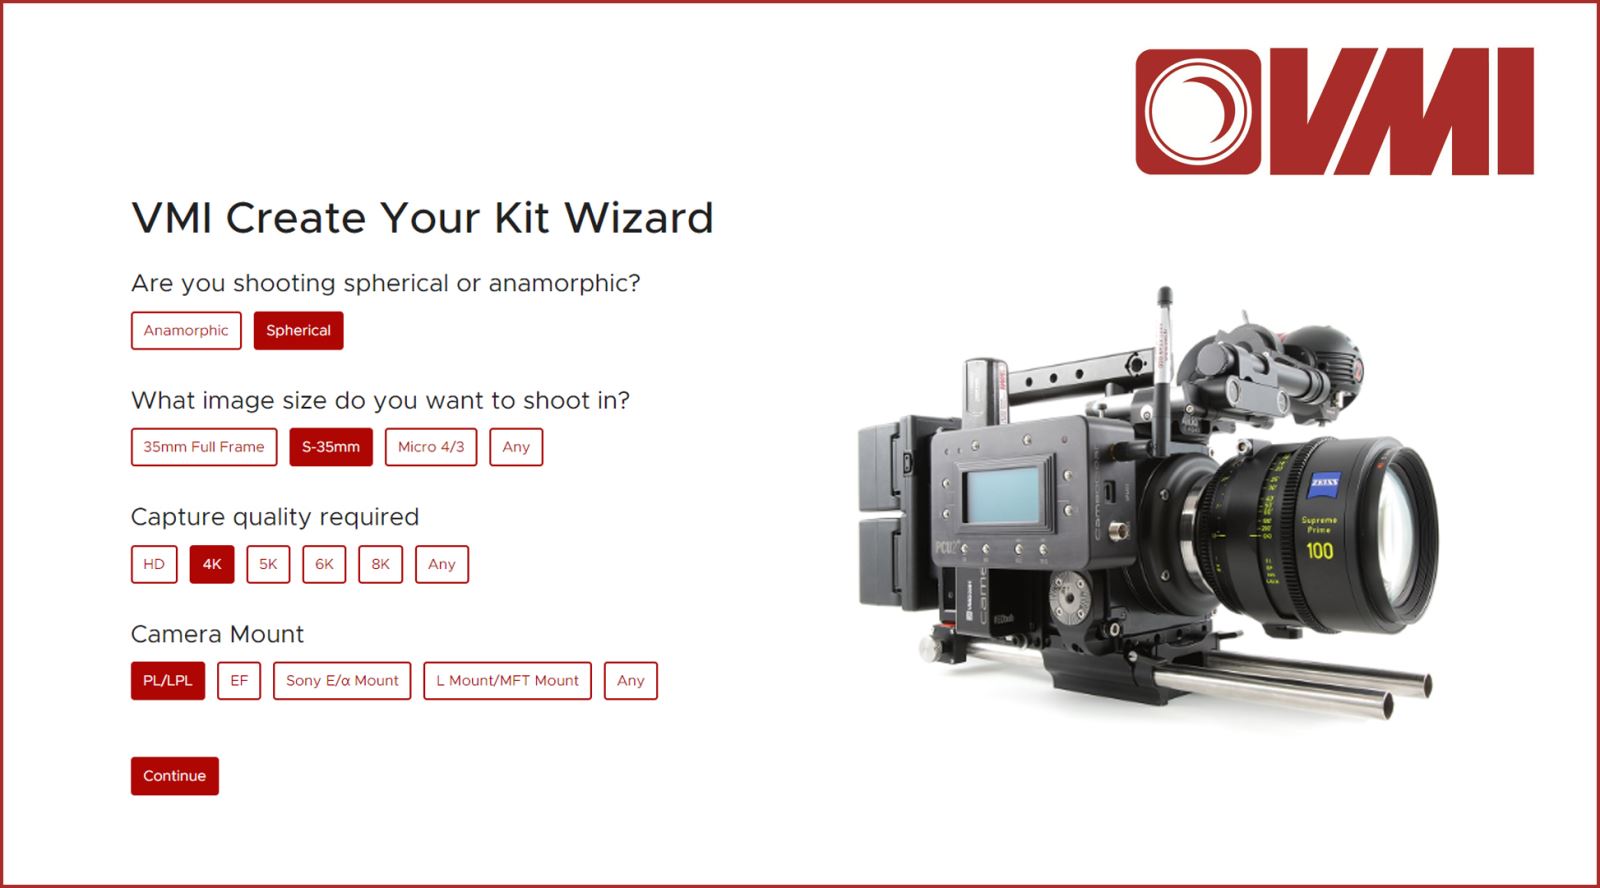 VMI Create Your Kit Wizard